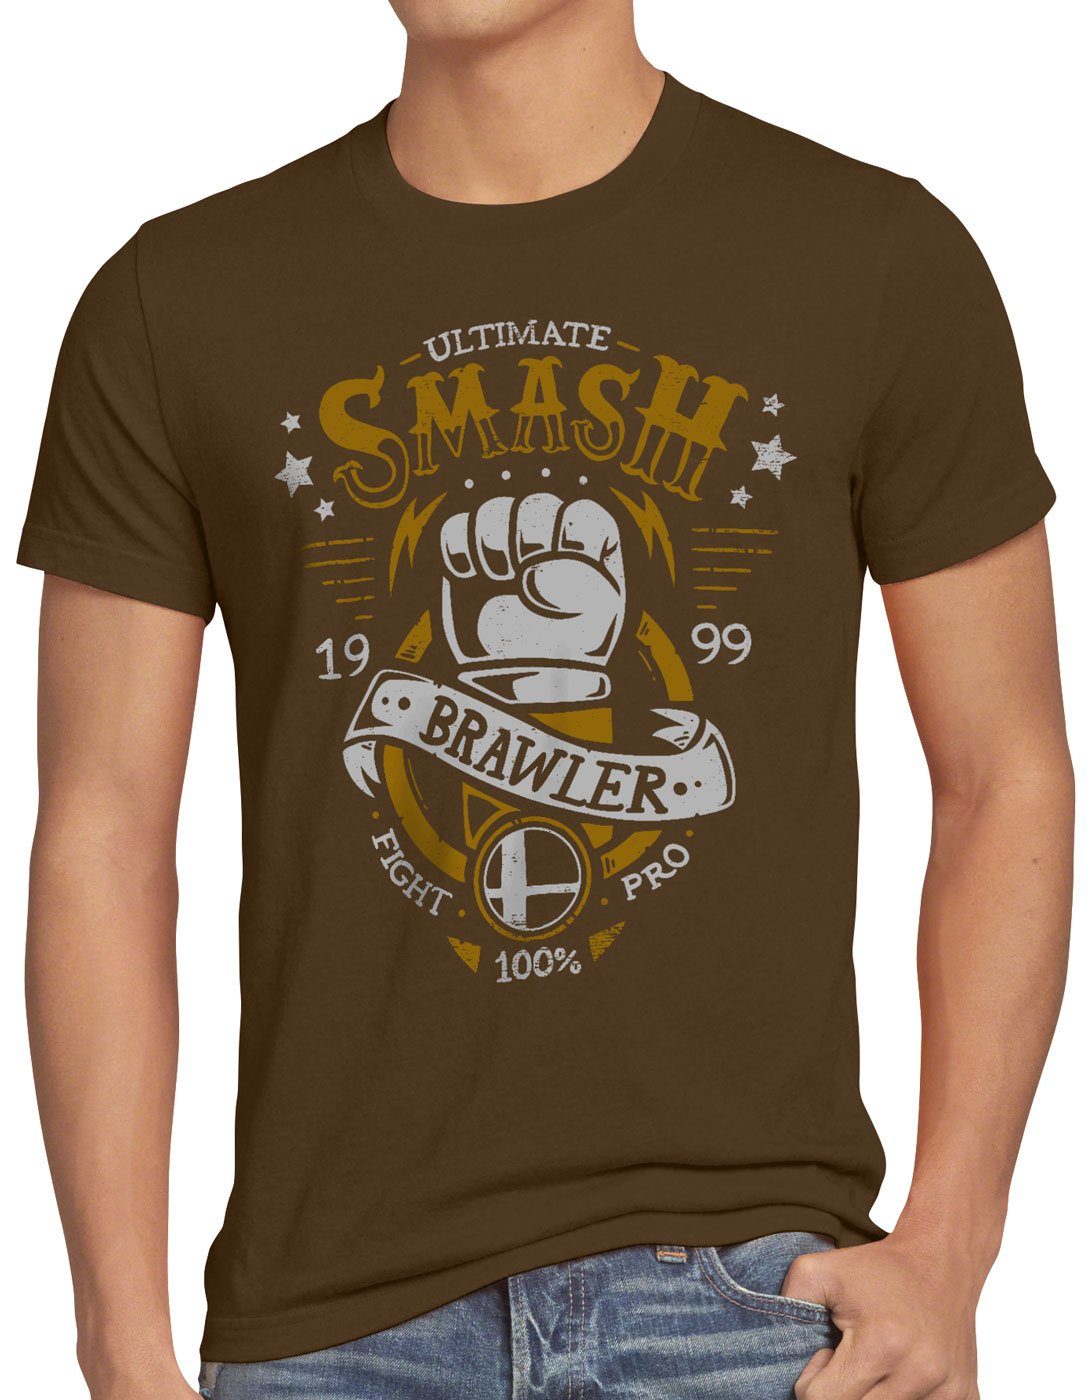 bros Smash Brawler braun T-Shirt Switch Herren Print-Shirt style3 Ultimate